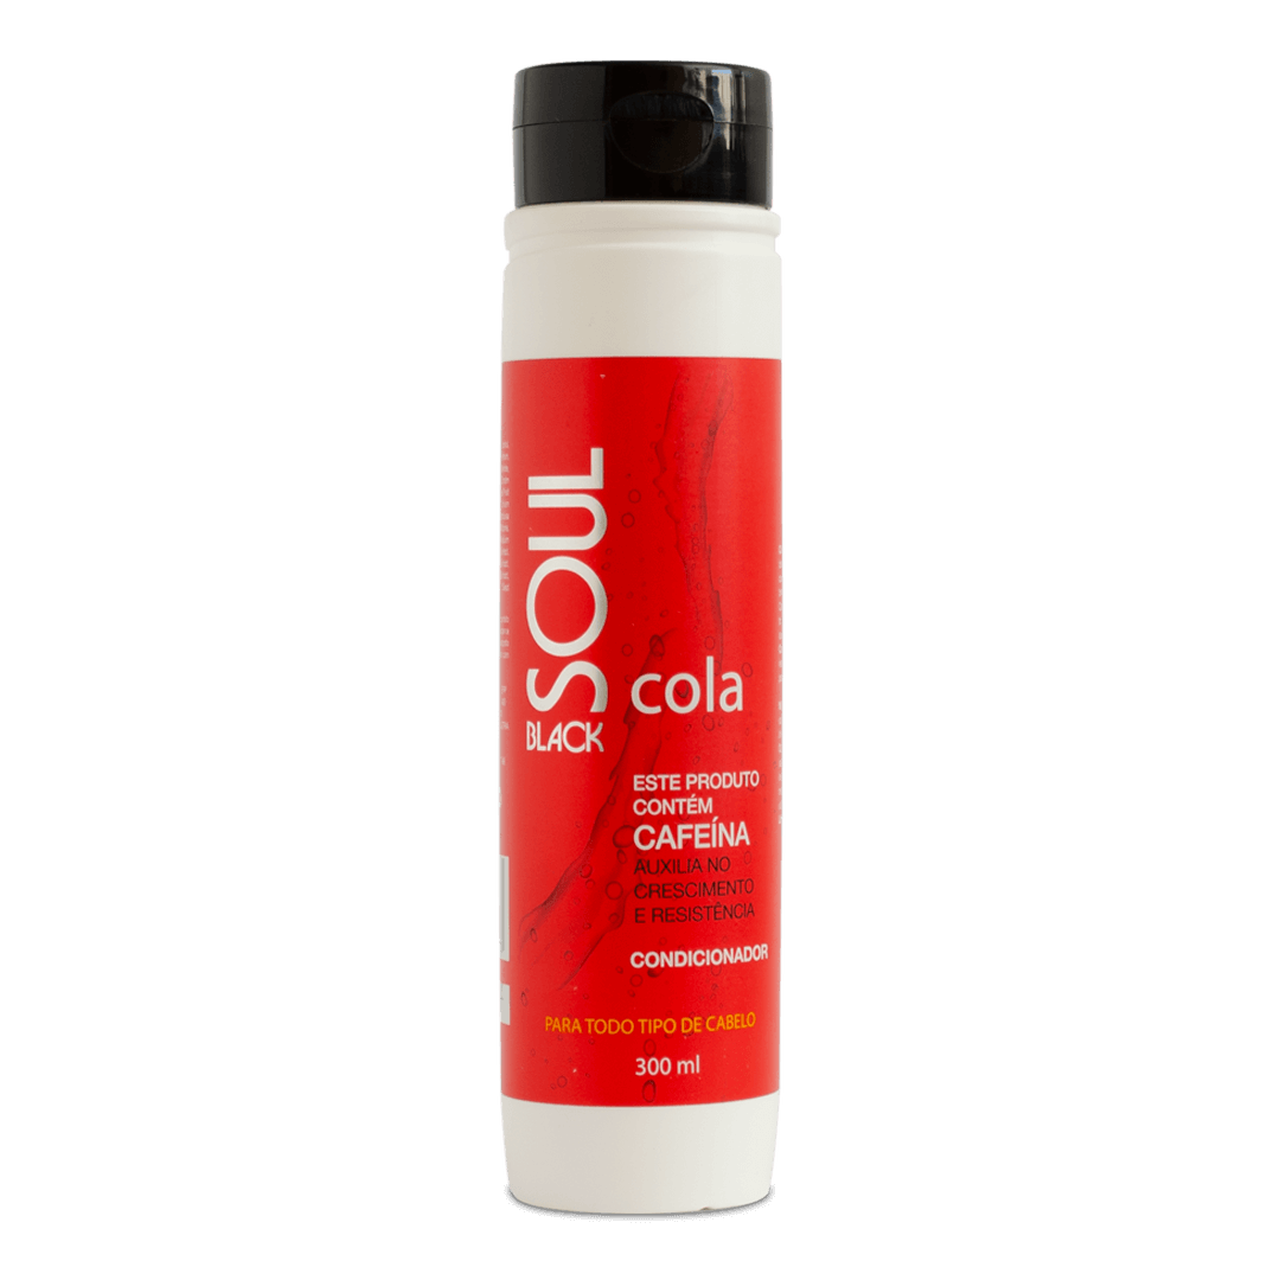 ASP Hair Care Soul Black Cola Conditioner 300ML - ASP